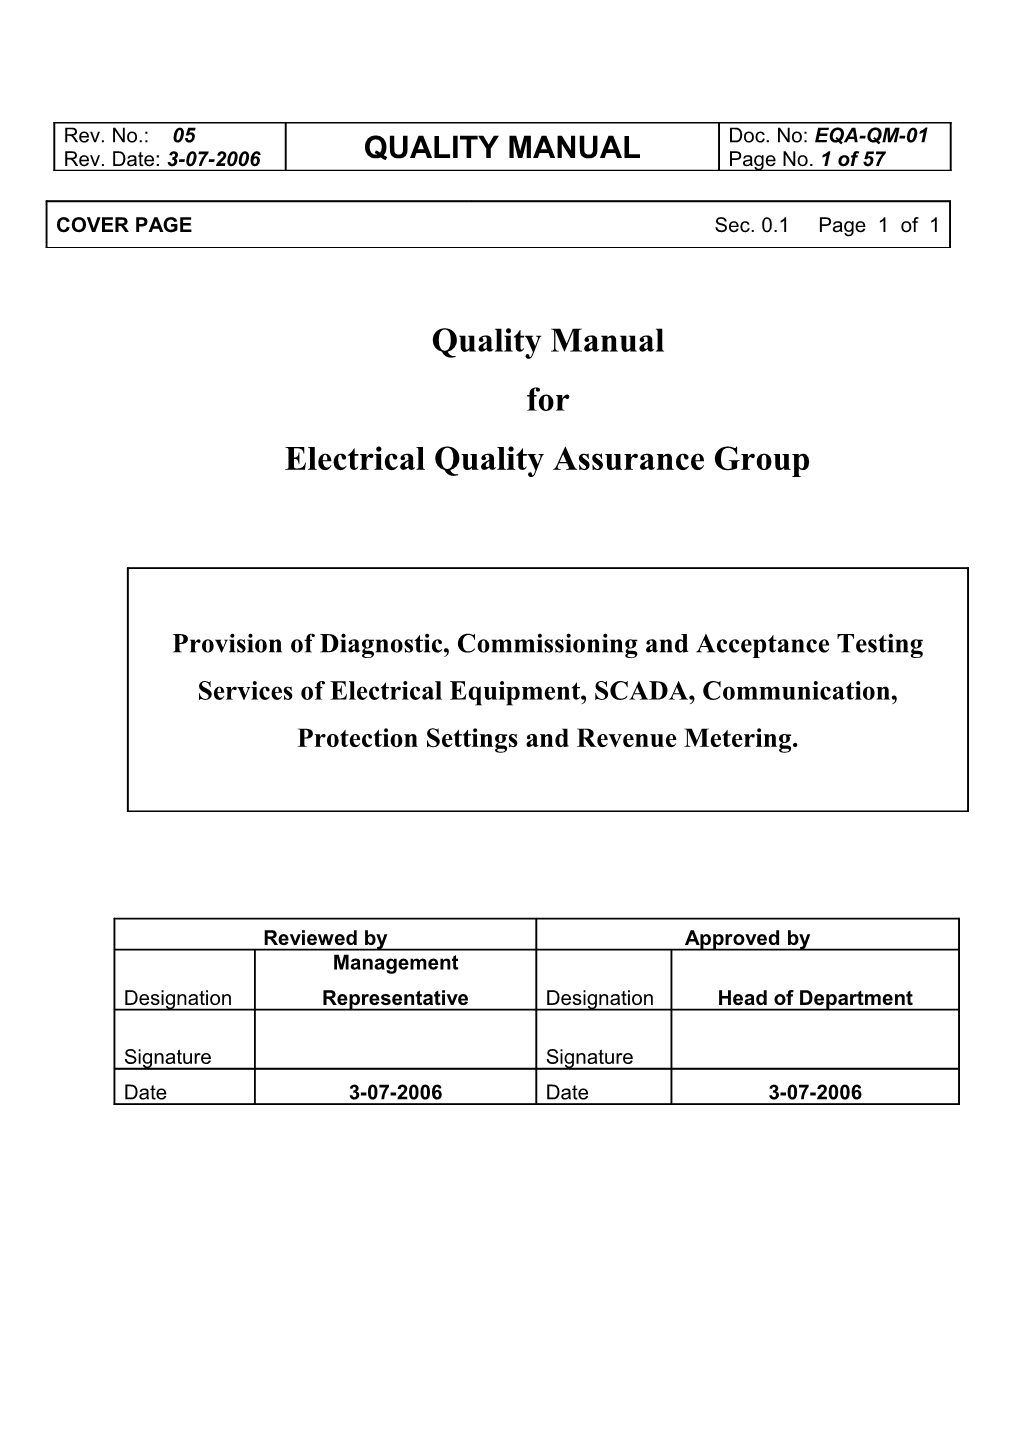 Quality Manual of EQAG